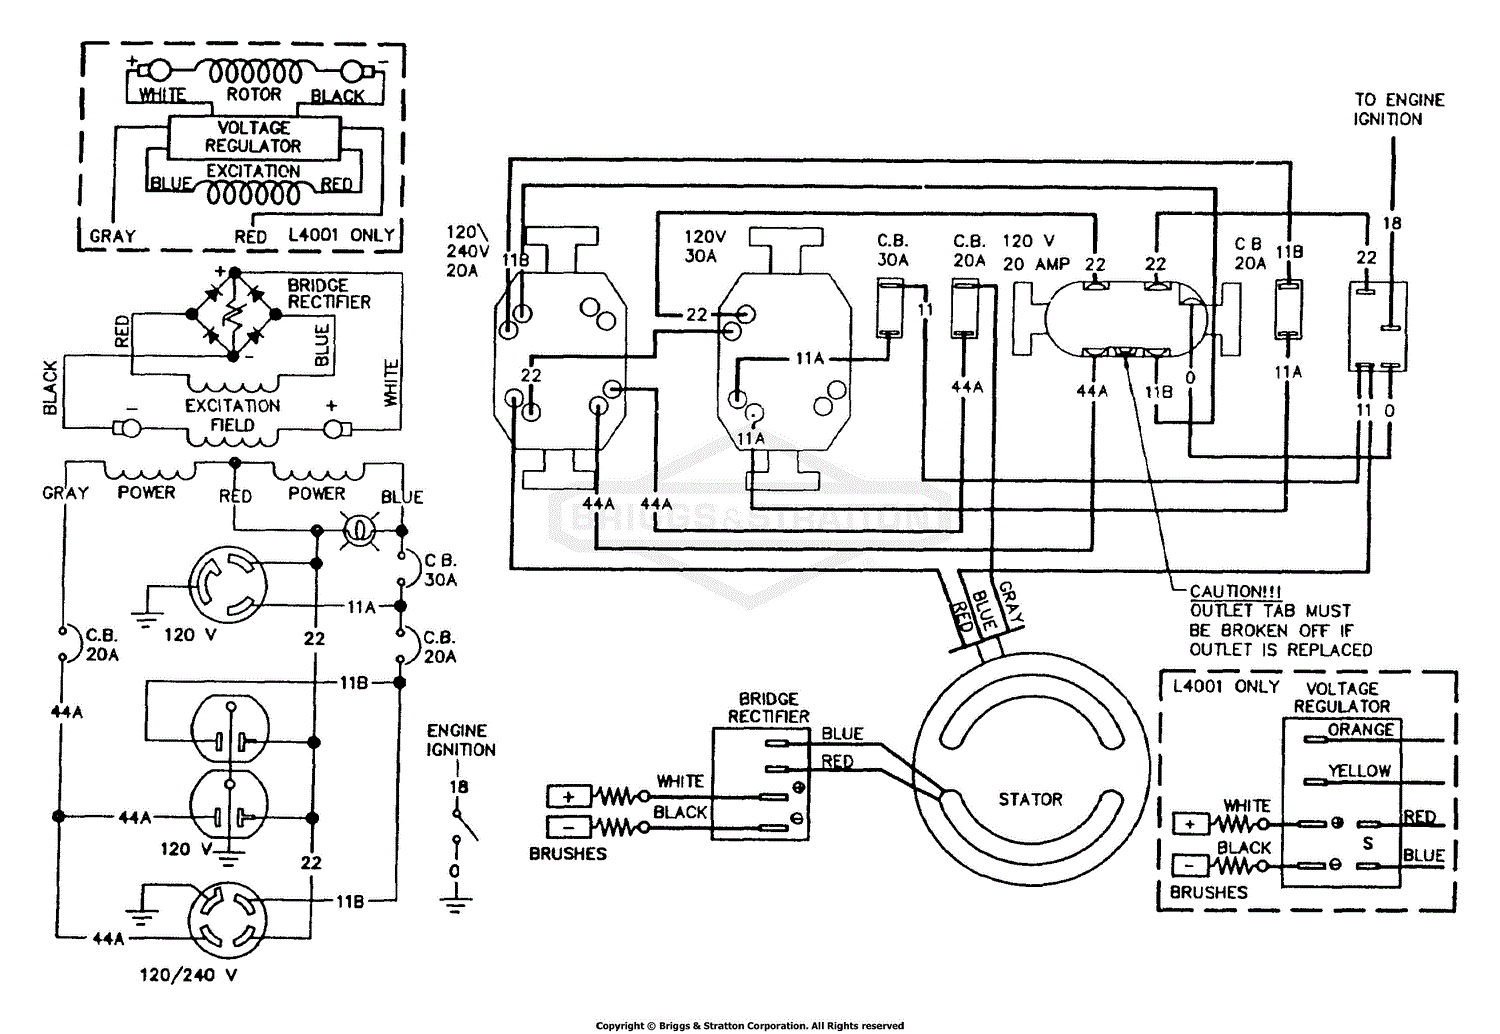 wiring diagram generac 4000xl - Wiring Diagram